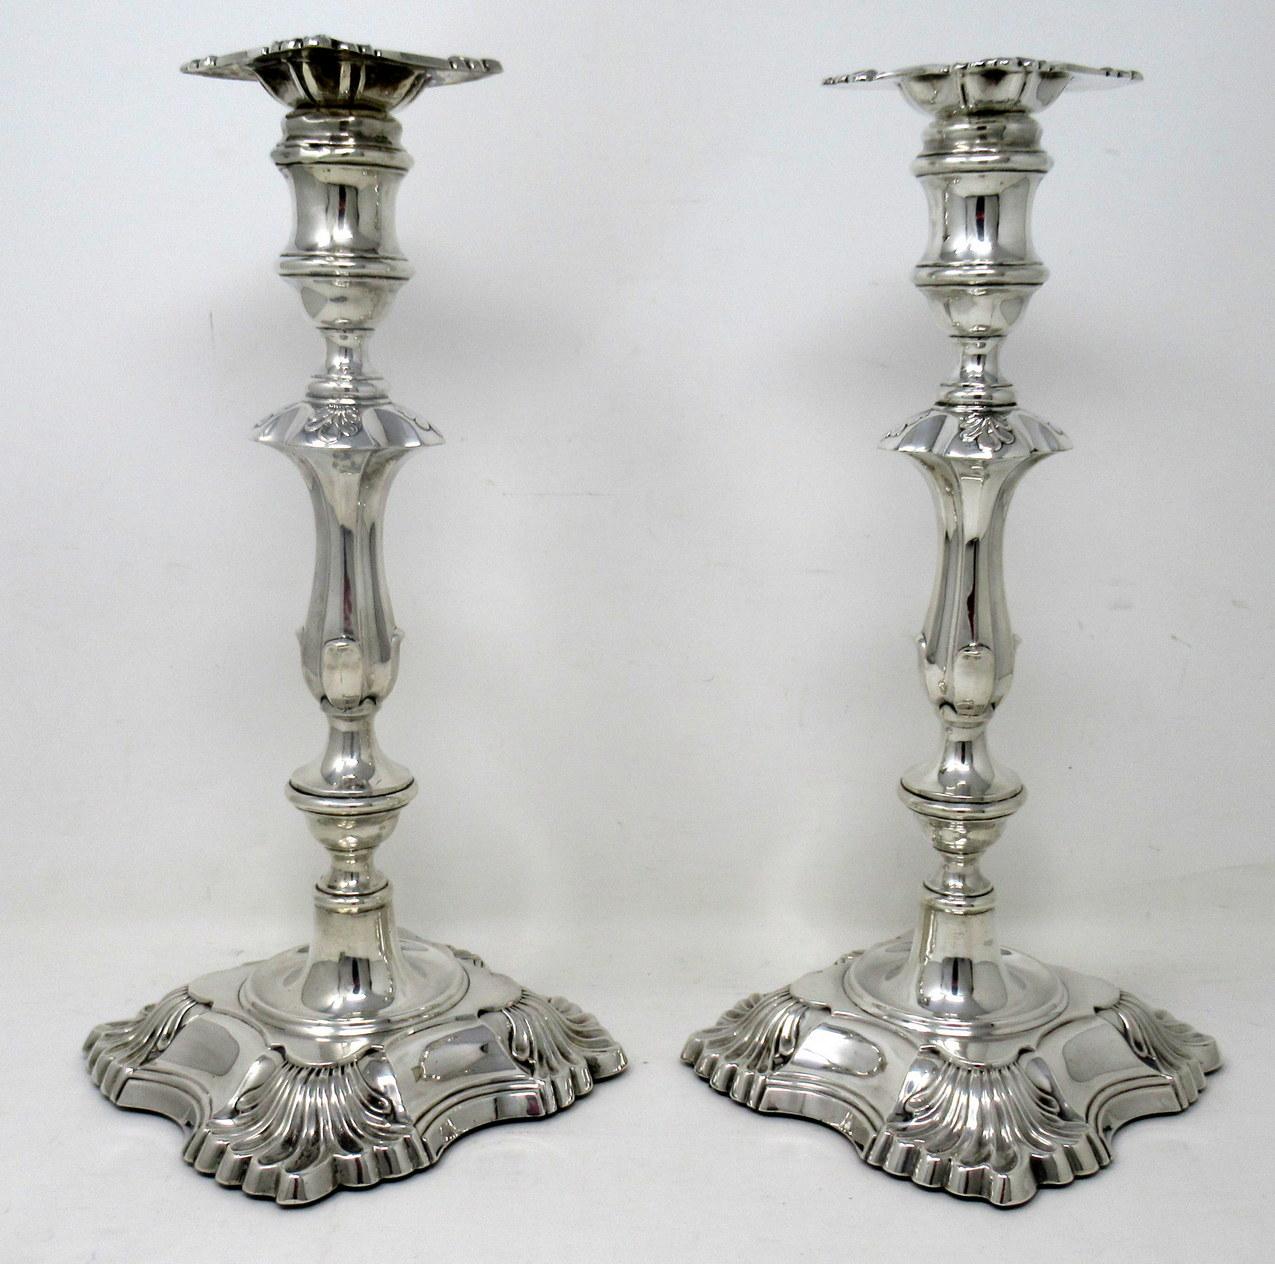 Cast Antique Pair English Sterling Silver Candlesticks Candelabra William Hutton 1905